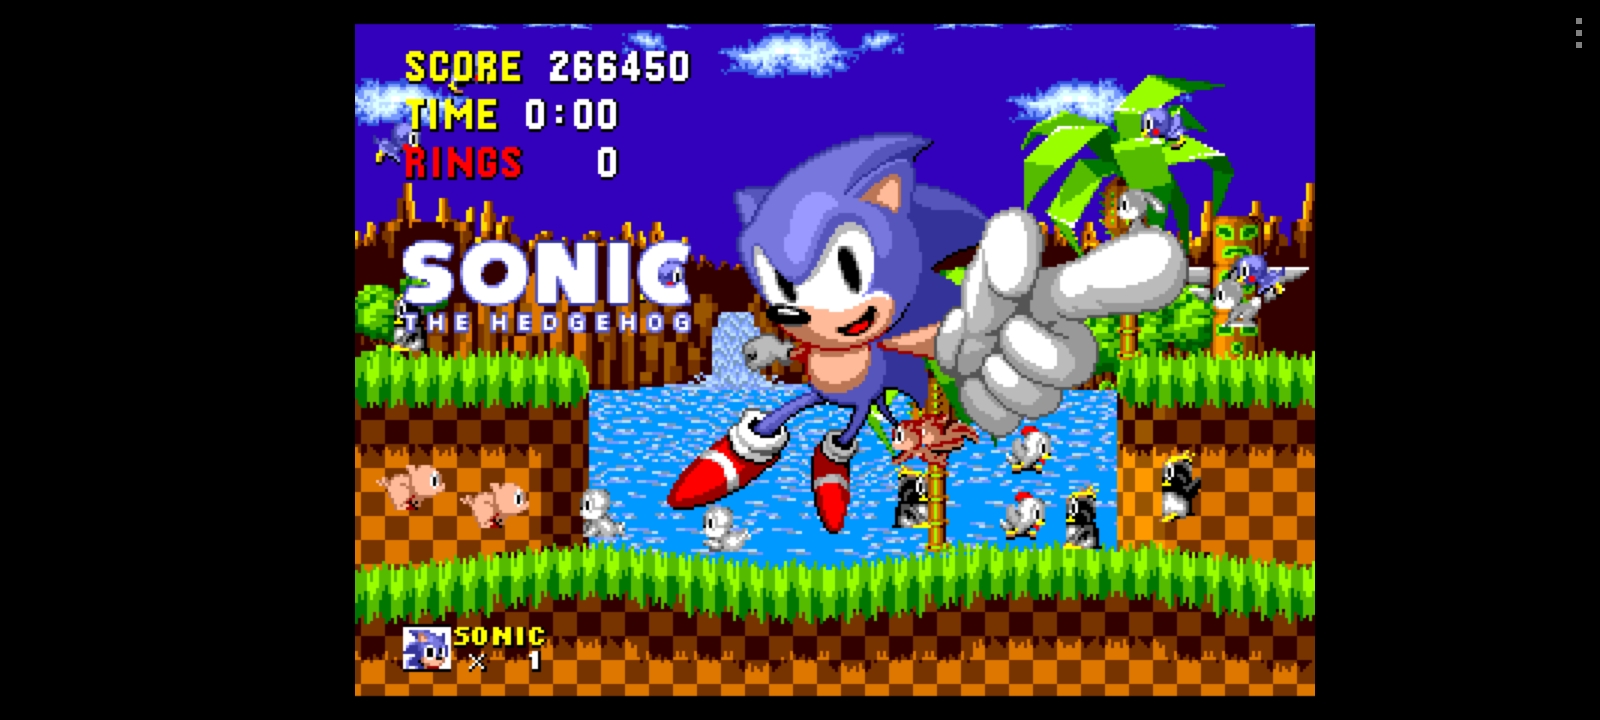 Hauntedprogram: Sega Smash Pack: Sonic The Hedgehog (Dreamcast Emulated) 266,450 points on 2022-07-07 07:24:10